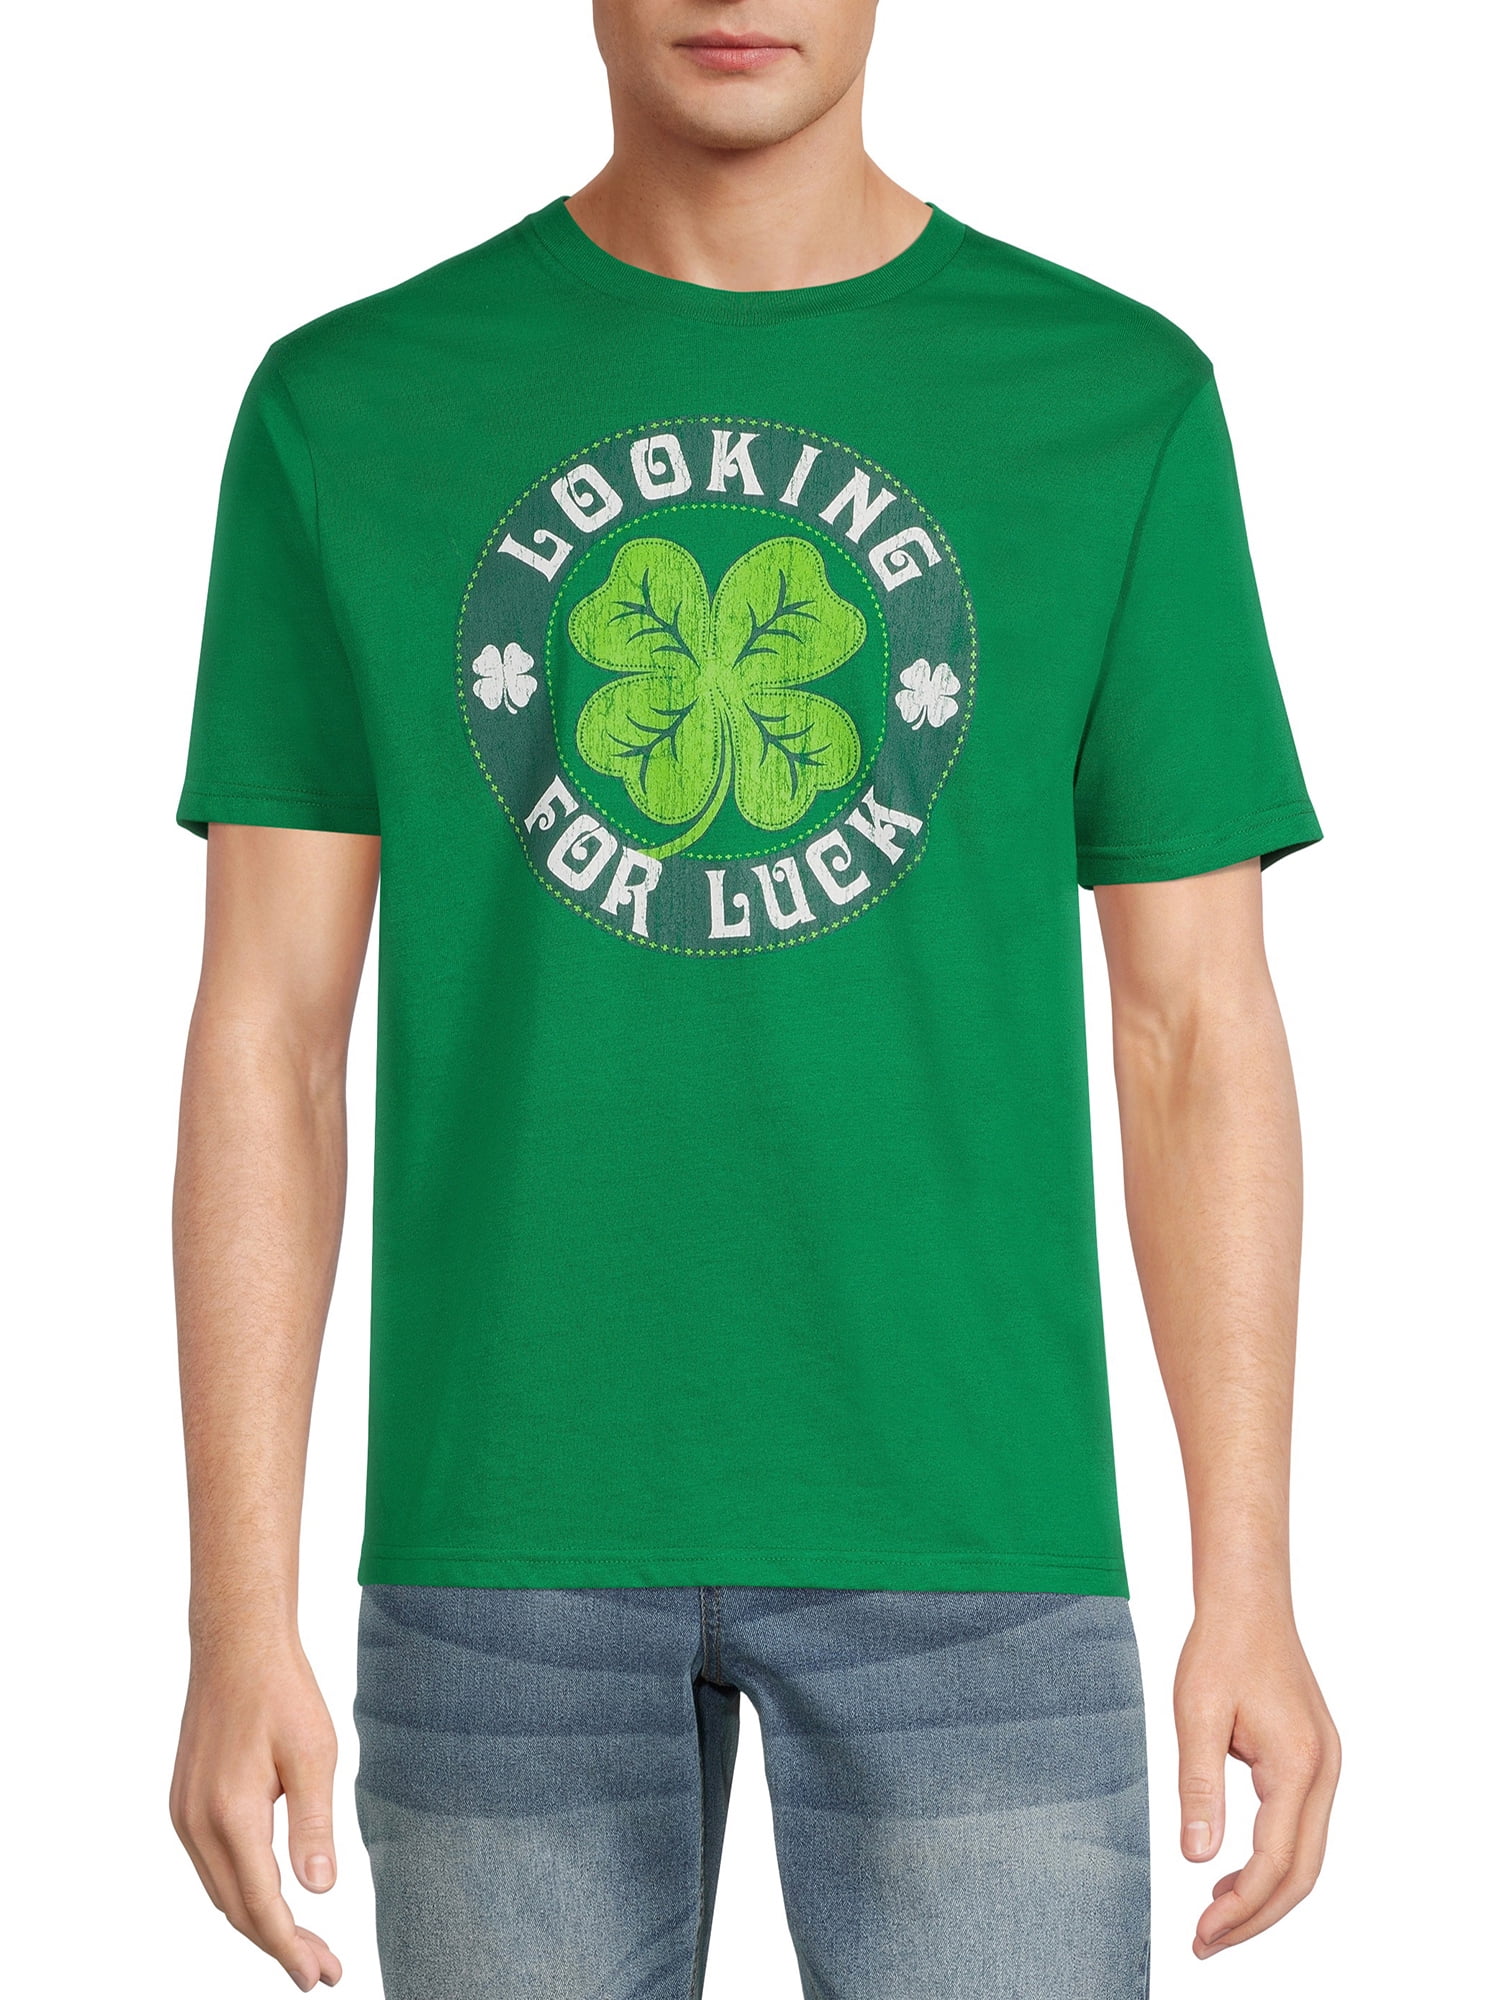 WAY TO CELEBRATE! Saint Patrick’s Day Men’s Lucky Circle Clover T-Shirt